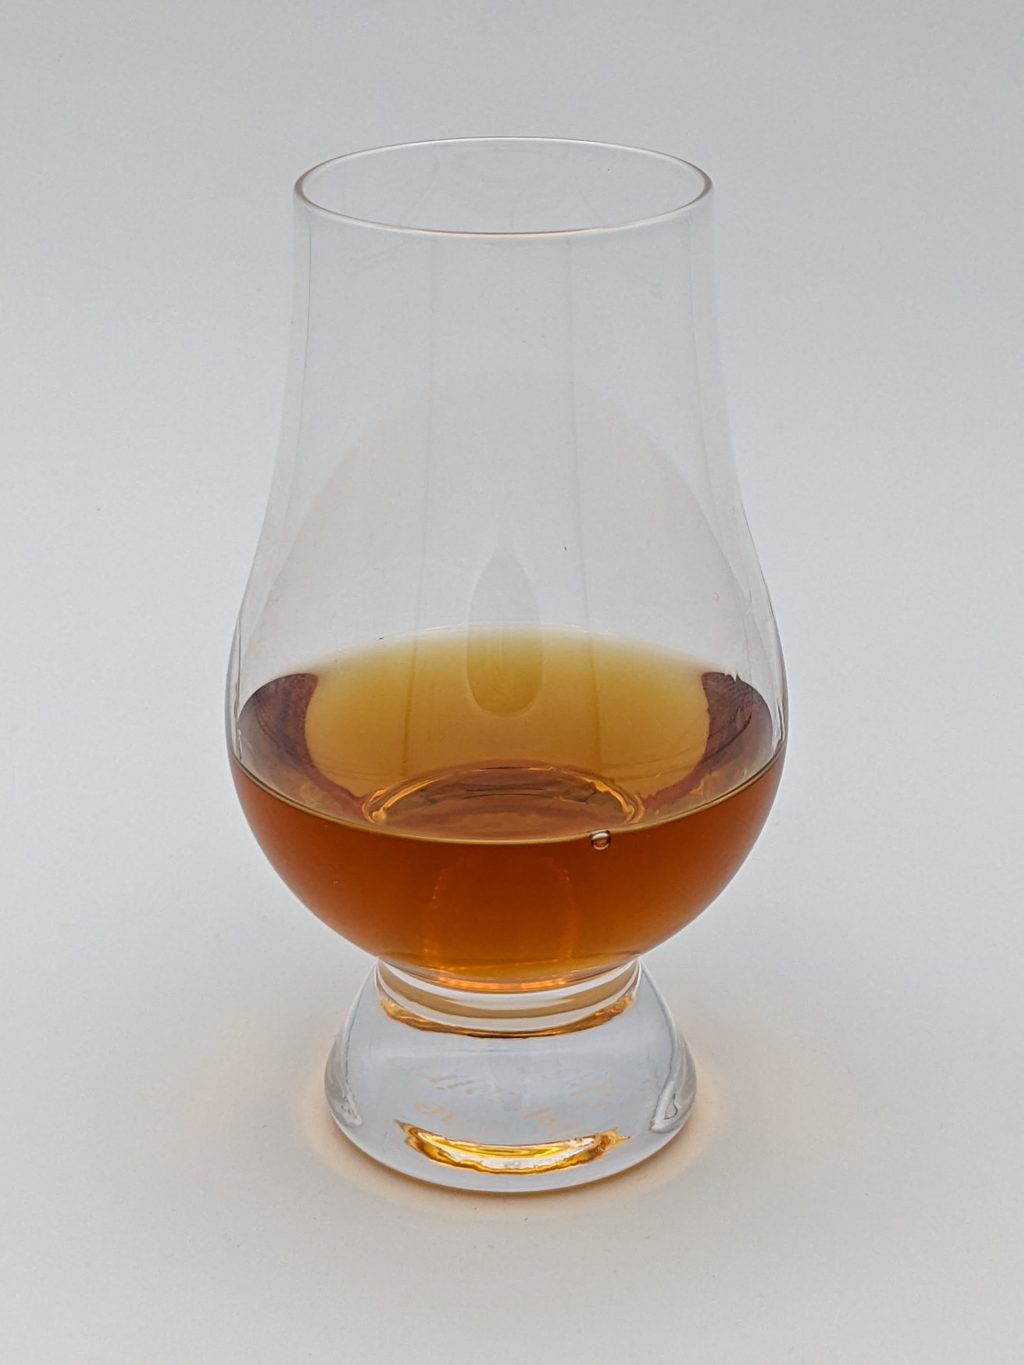 dark brown liquid in a glencairn glass